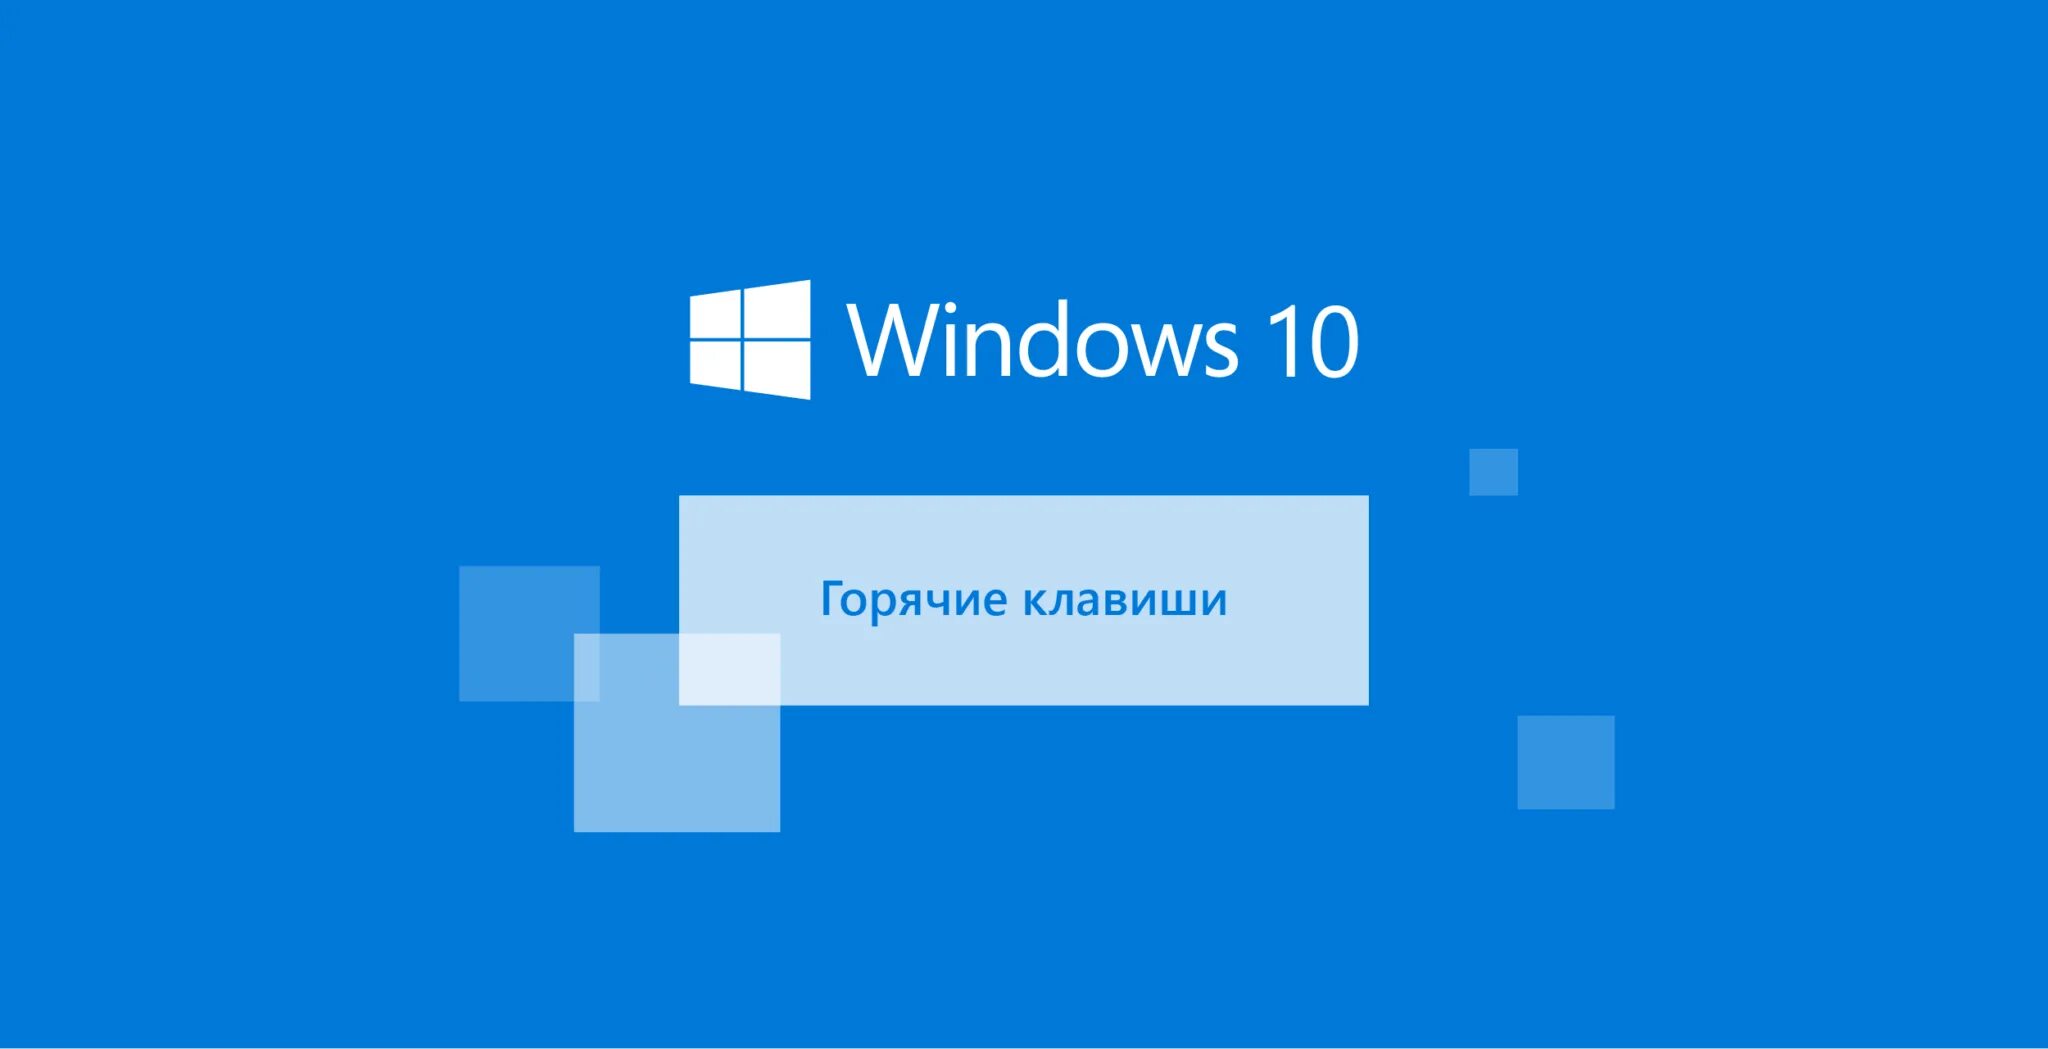 Нажми windows клавиши windows. Клавиши Windows 10. Горячие клавиши. Windows. Горячие клавиши Windows 10. Комбинации клавиш виндовс.